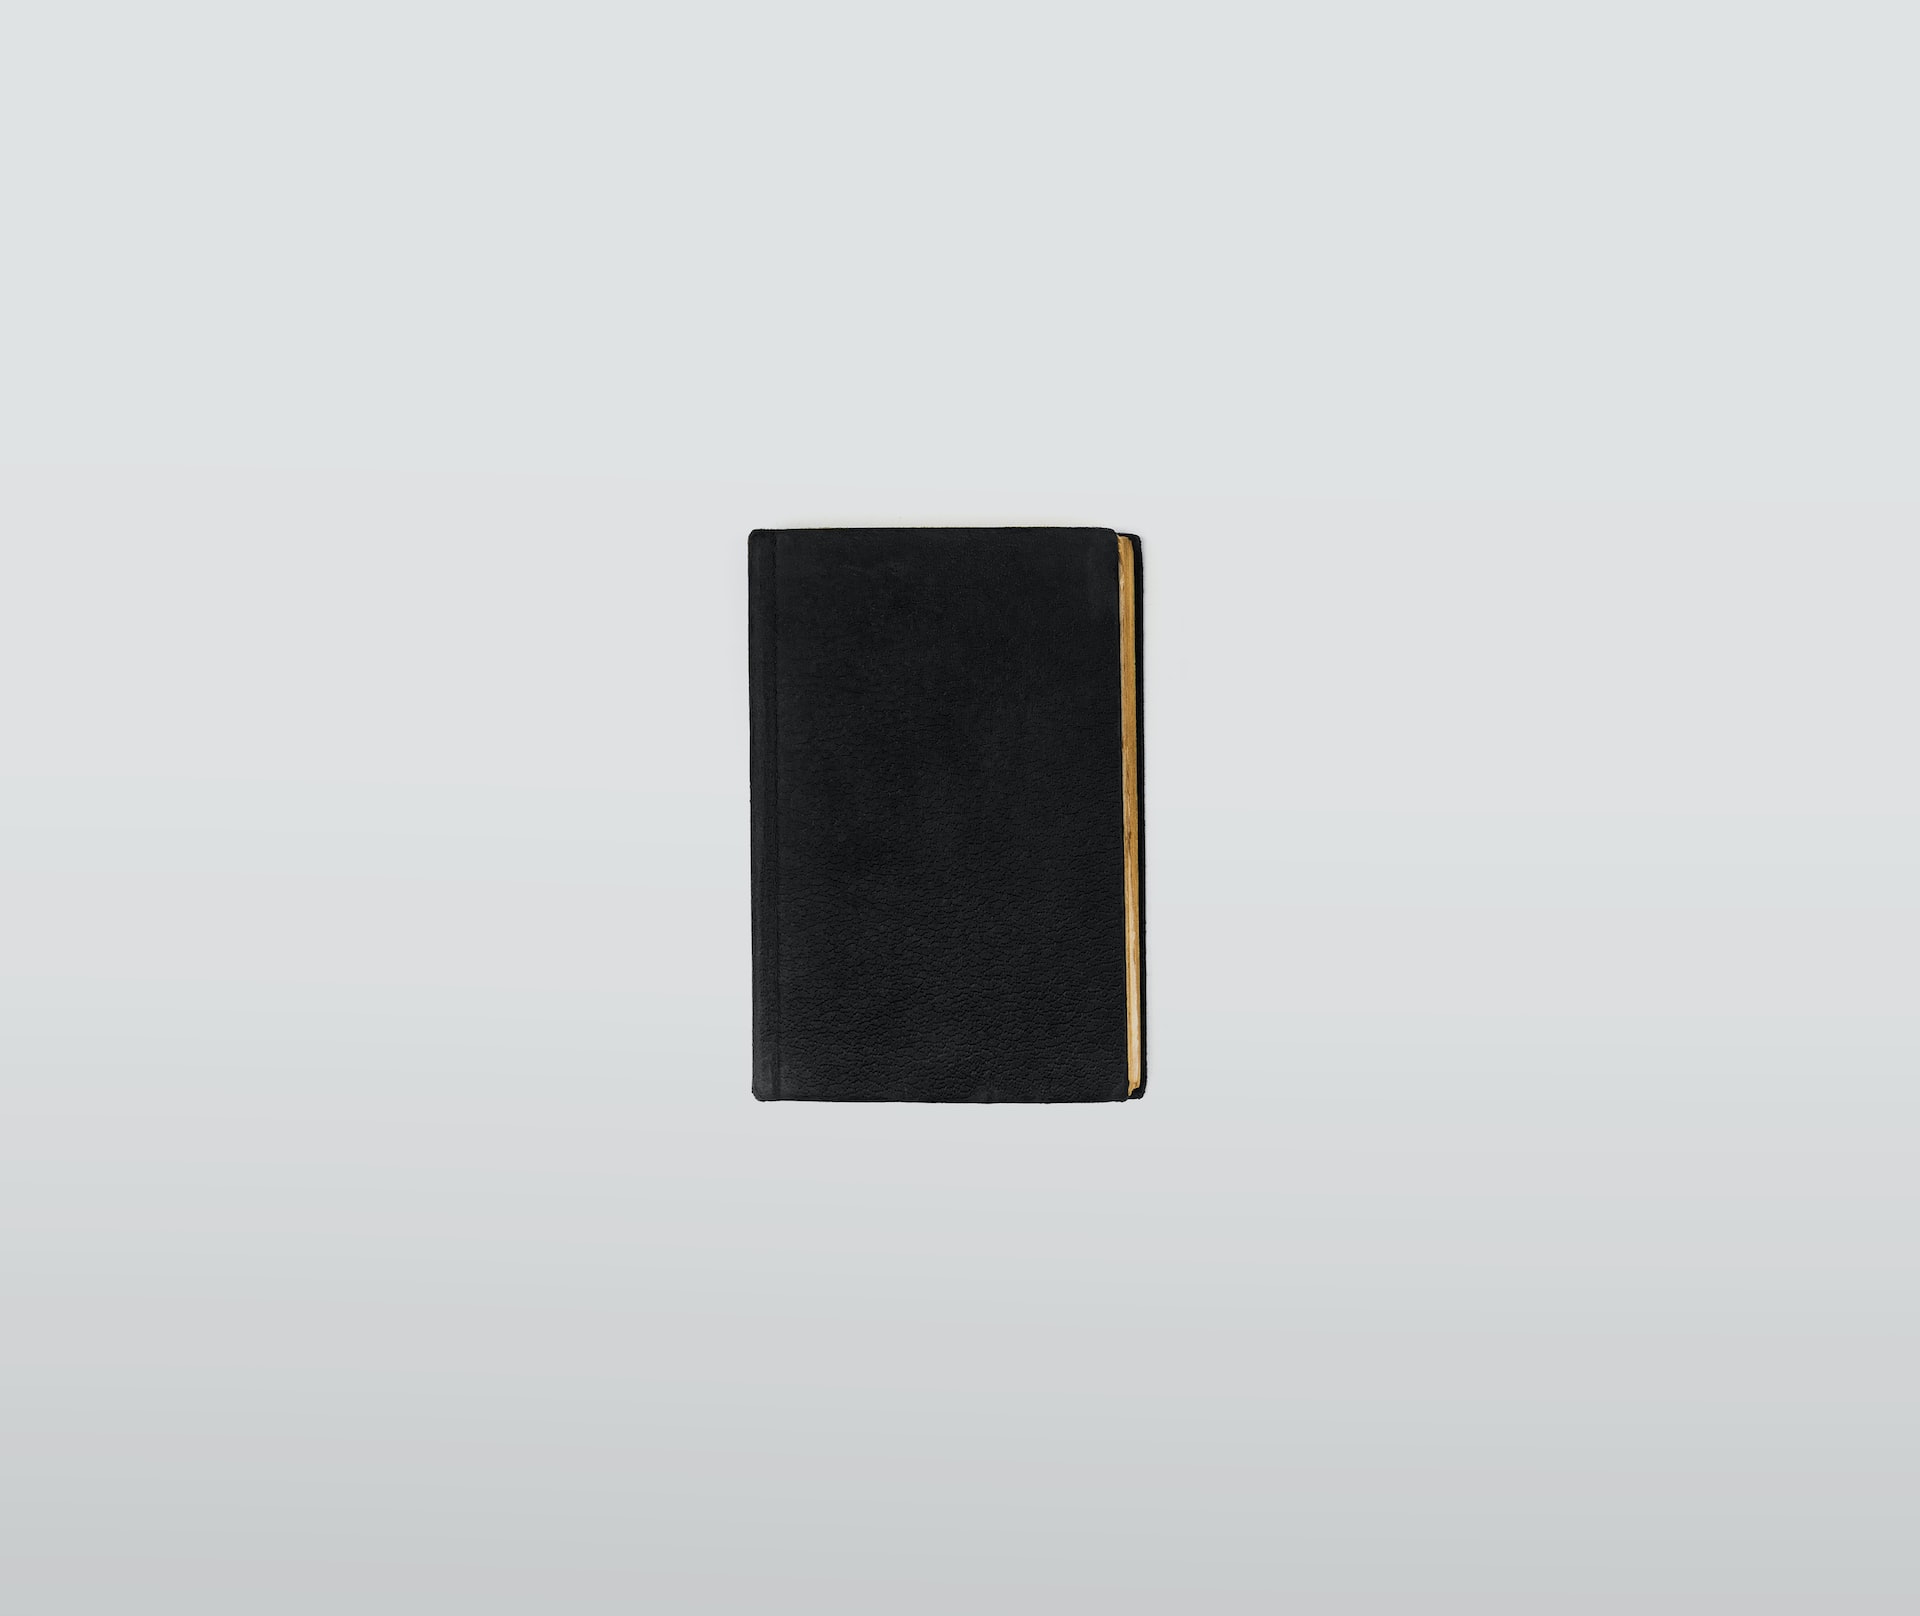 A black notepad, closed